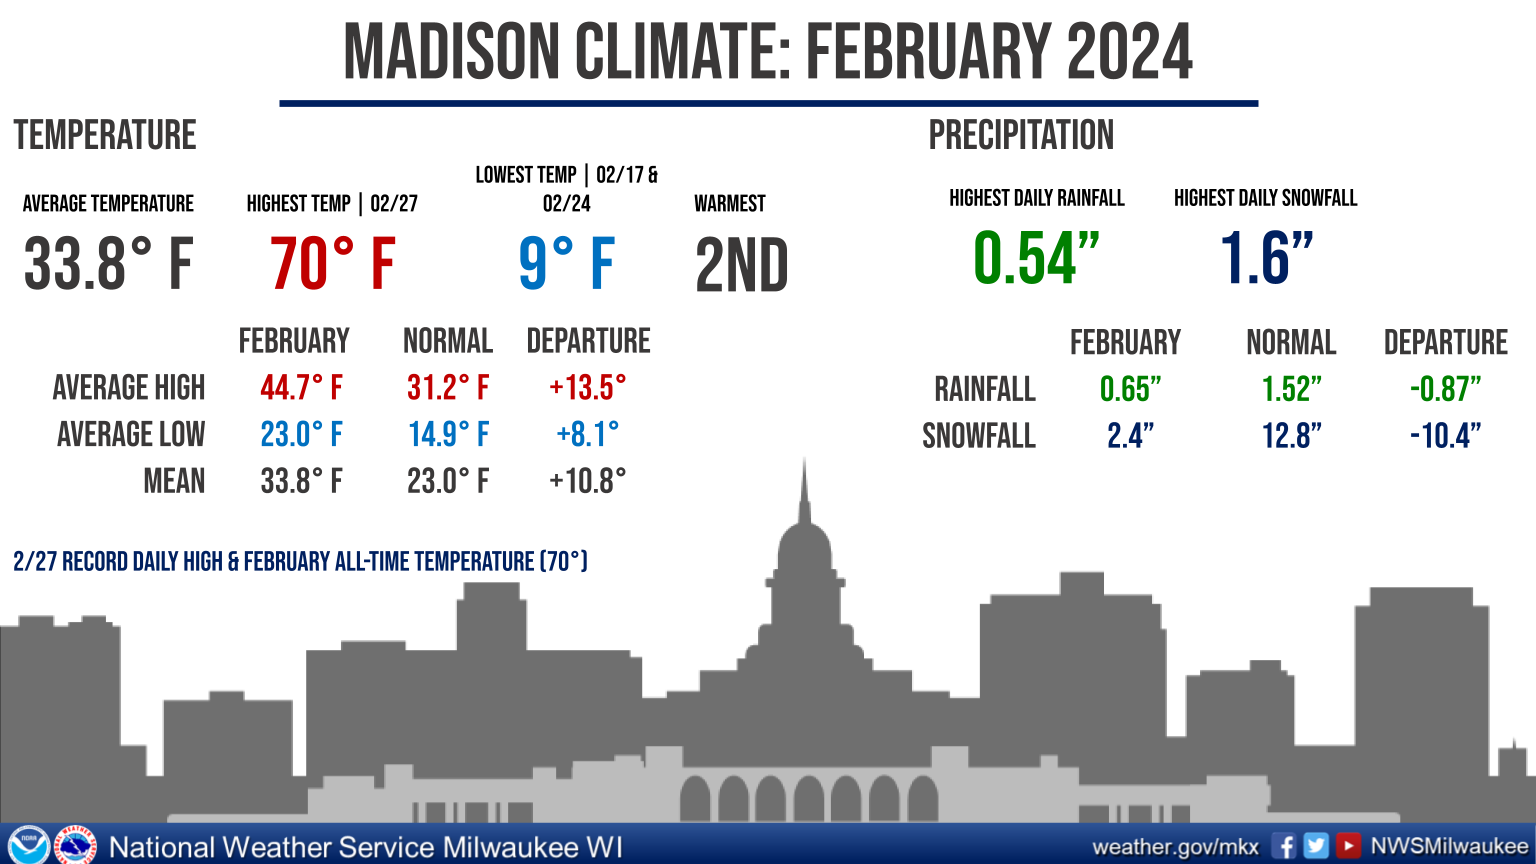 Madison Climate Summary Feb 2024